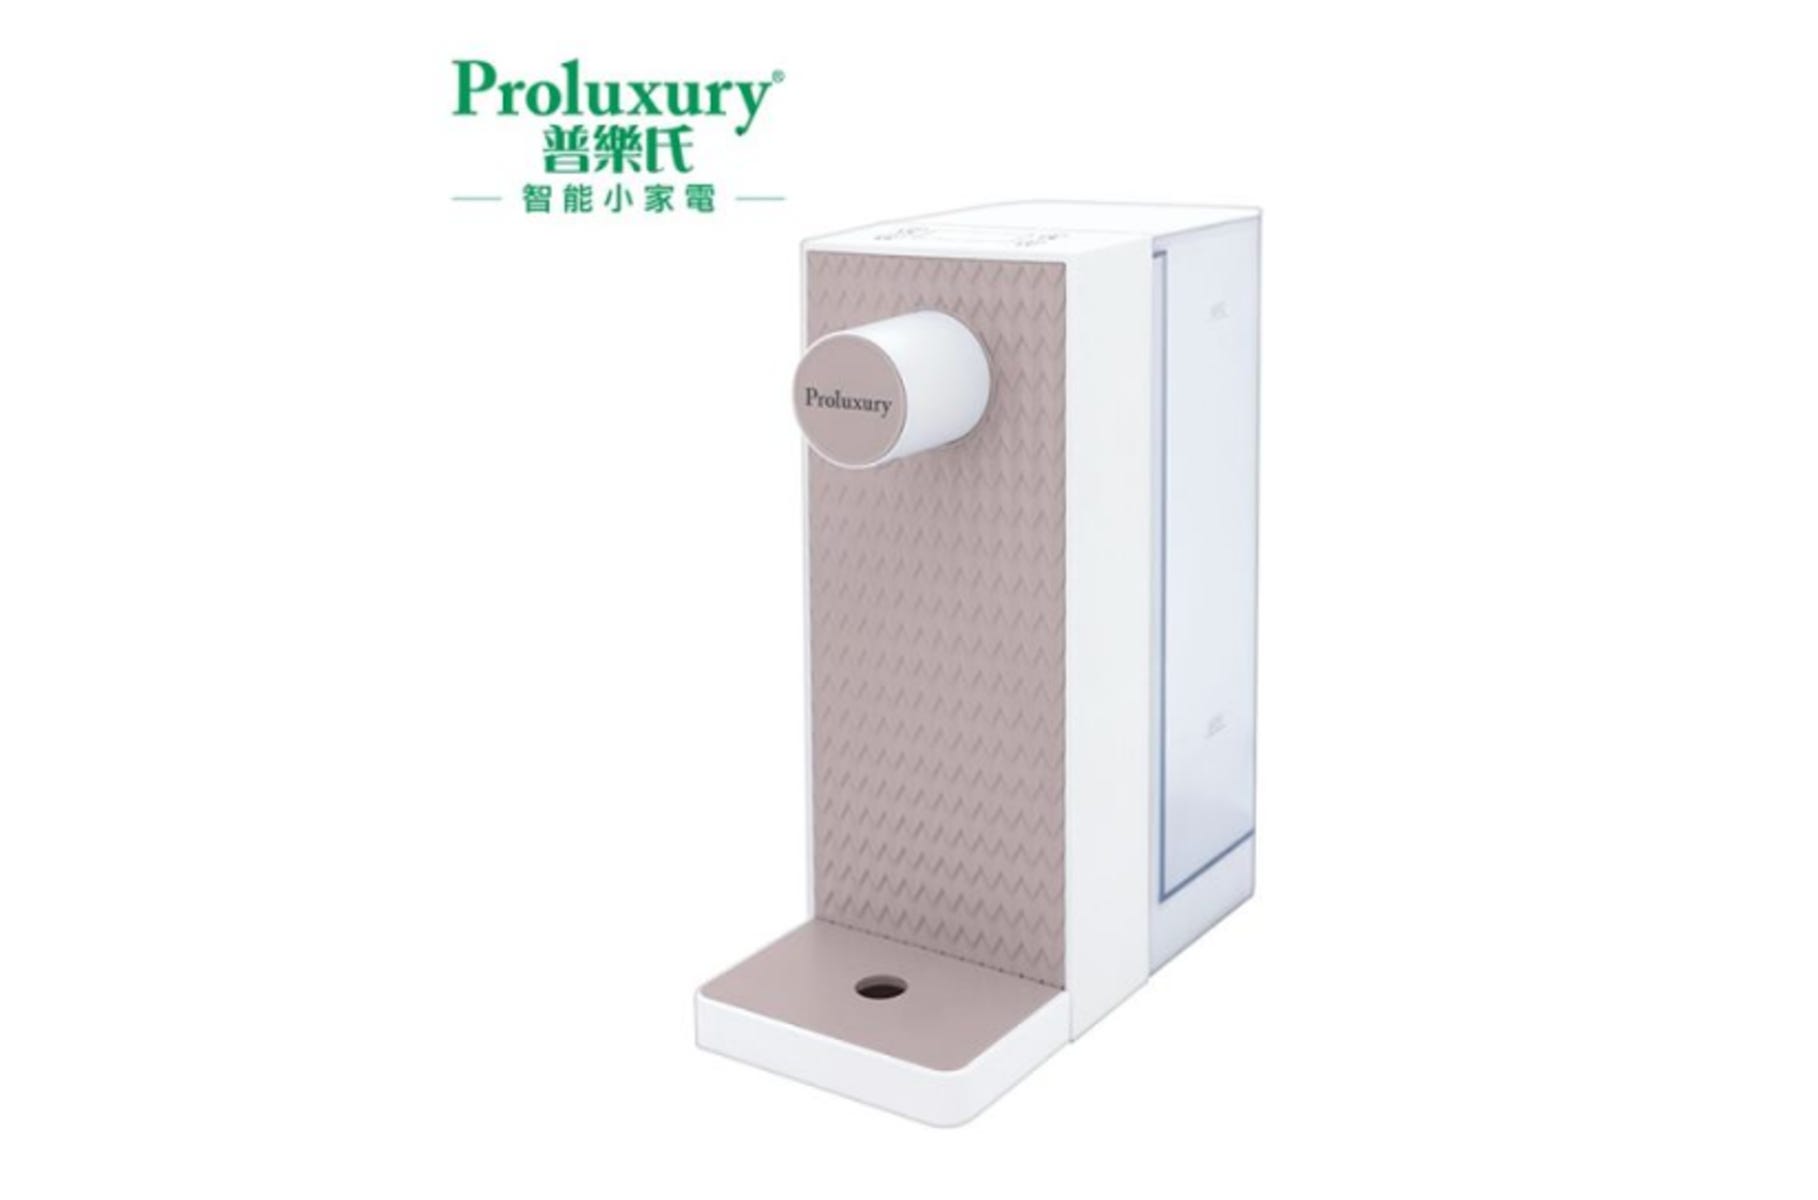 PTP500020B Proluxury 2 liters 3 seconds instant hot water dispenser (Promotion)